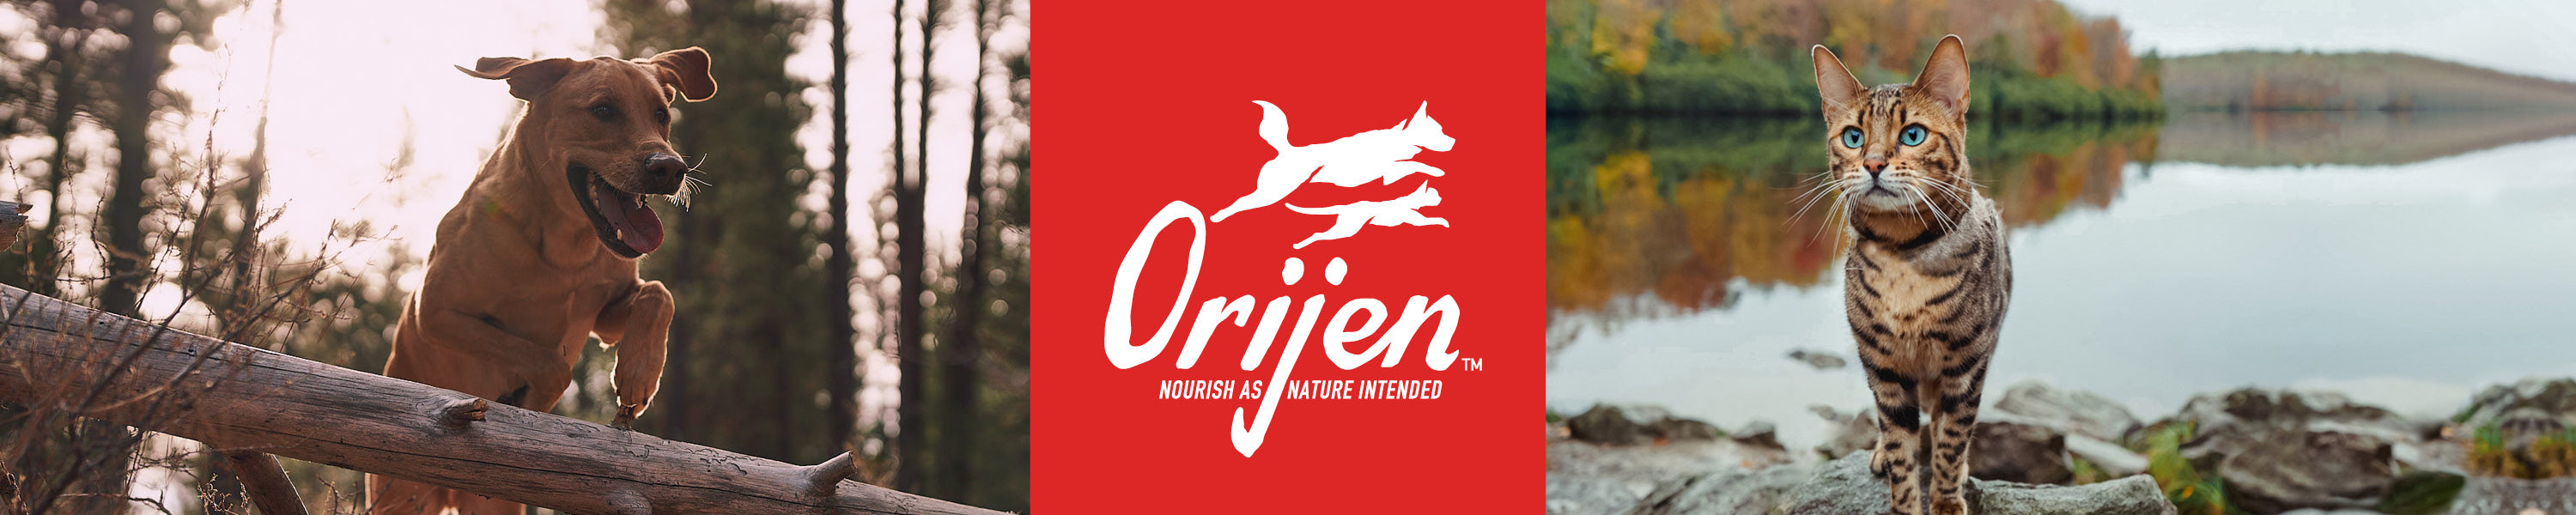 Buy Orijen Pet Food online in Canada at PetMax.ca